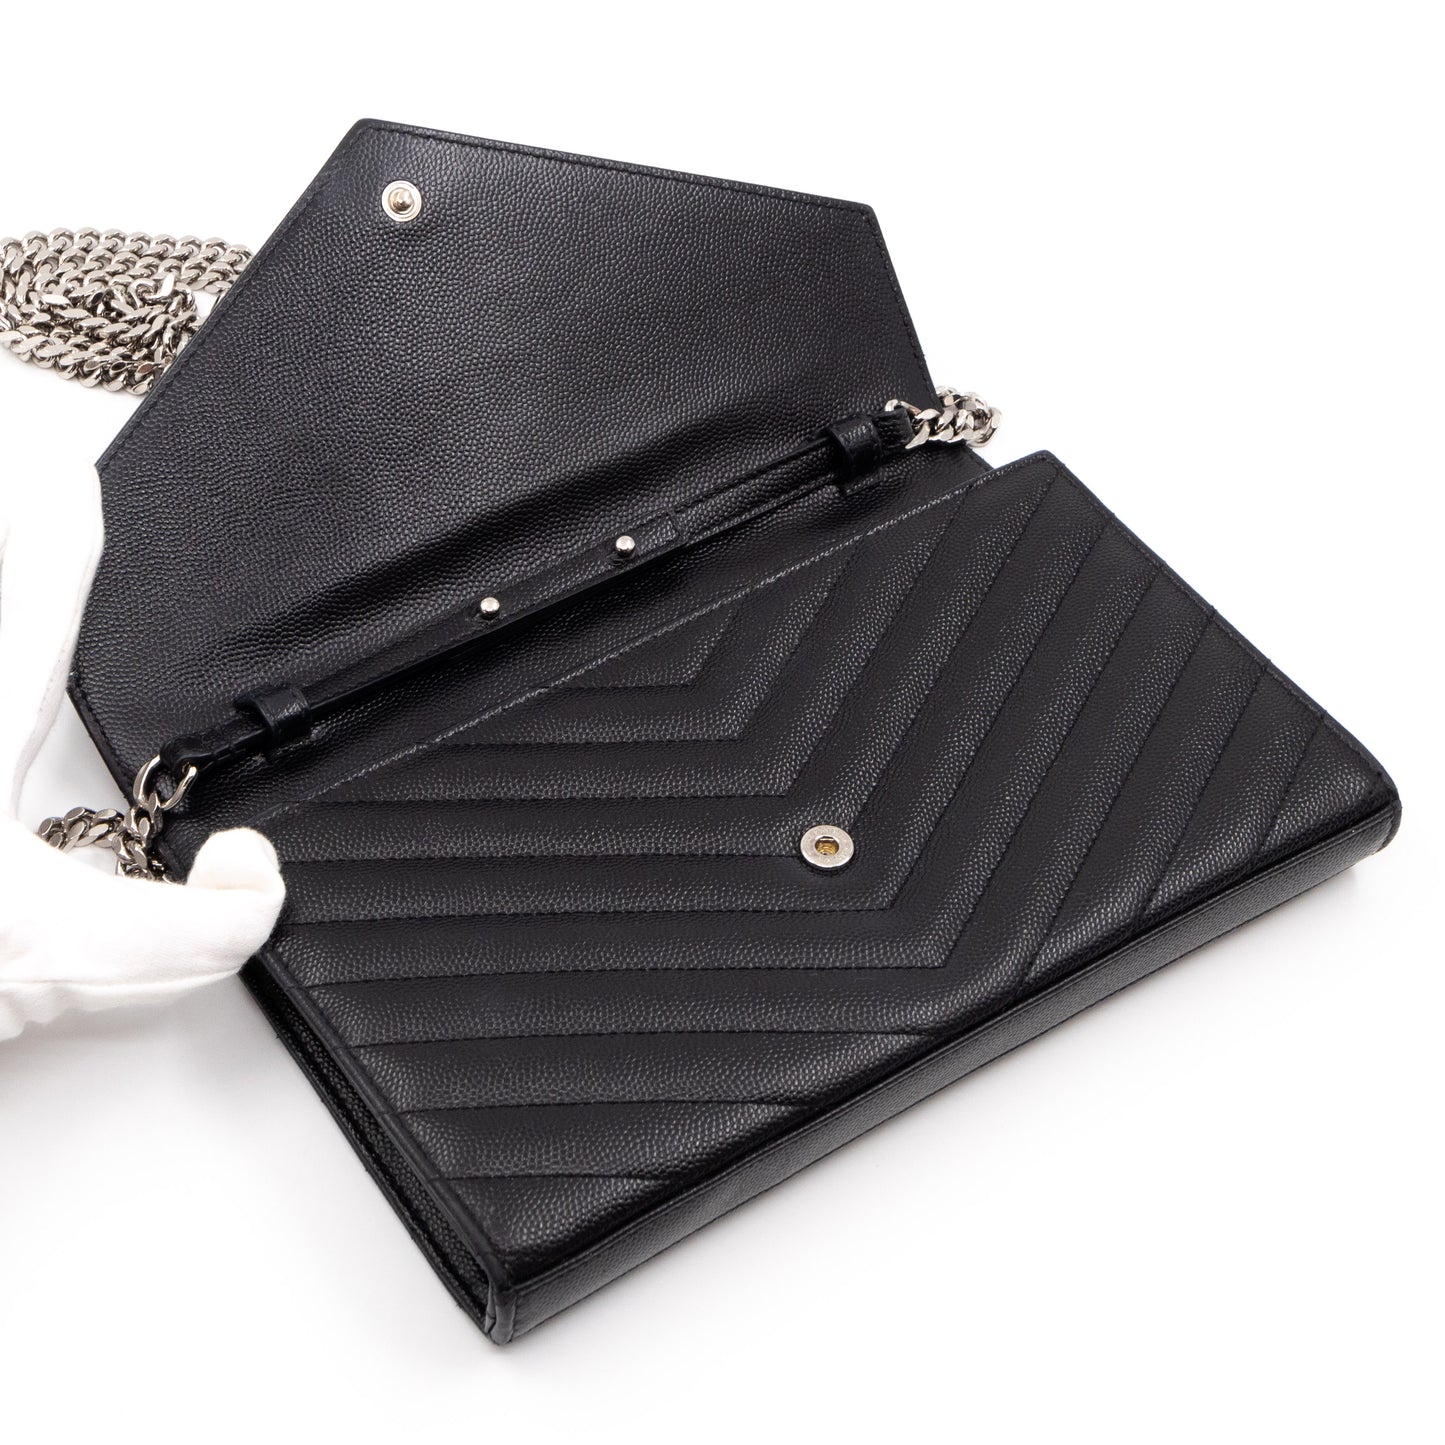 Cassandre Matelasse Chain Wallet Black Leather